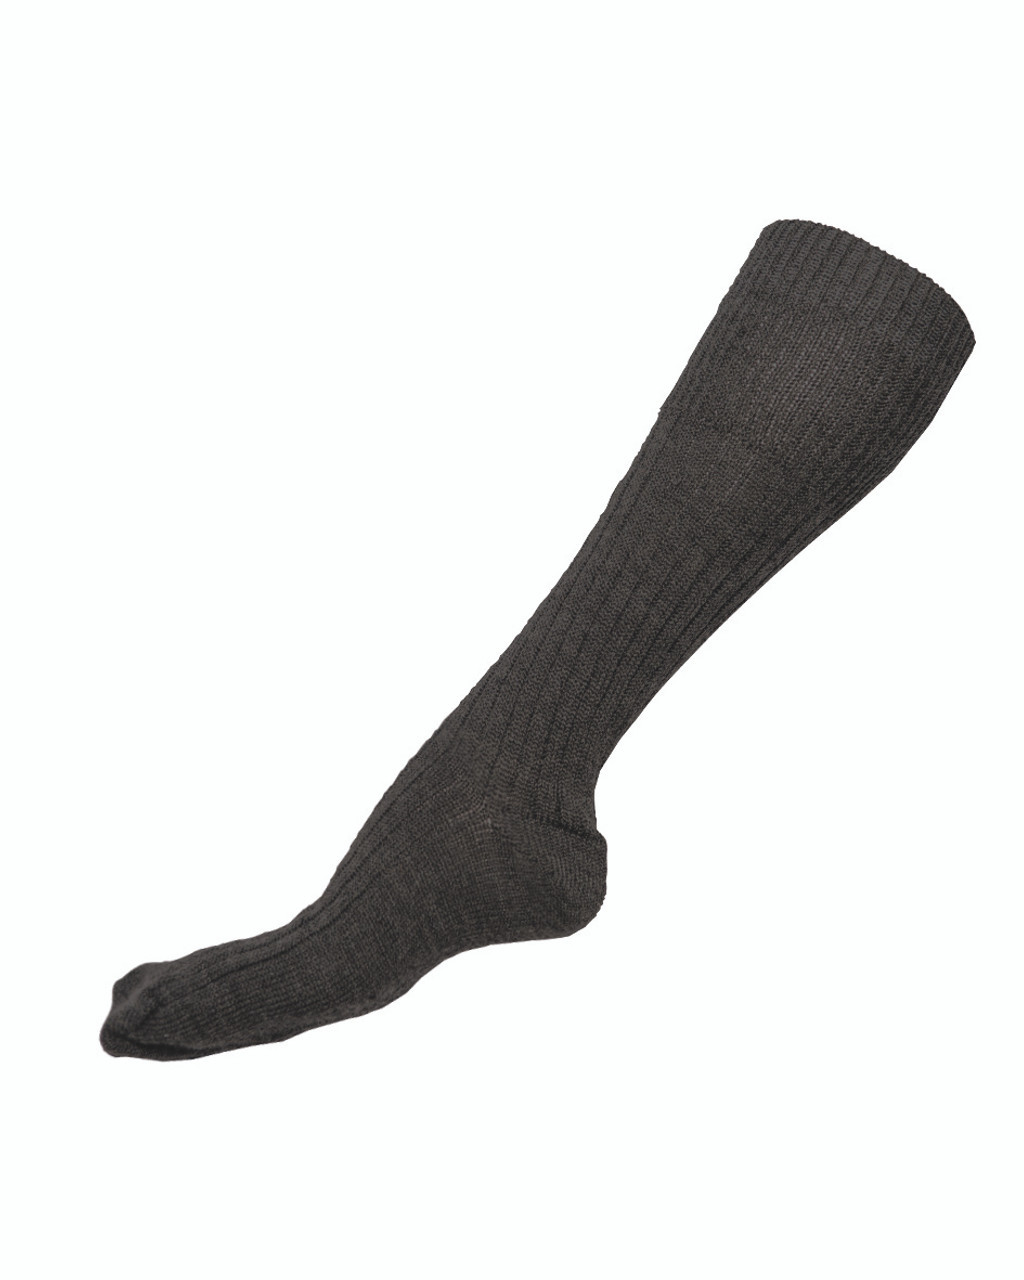 TSR Grey Boot Socks - New